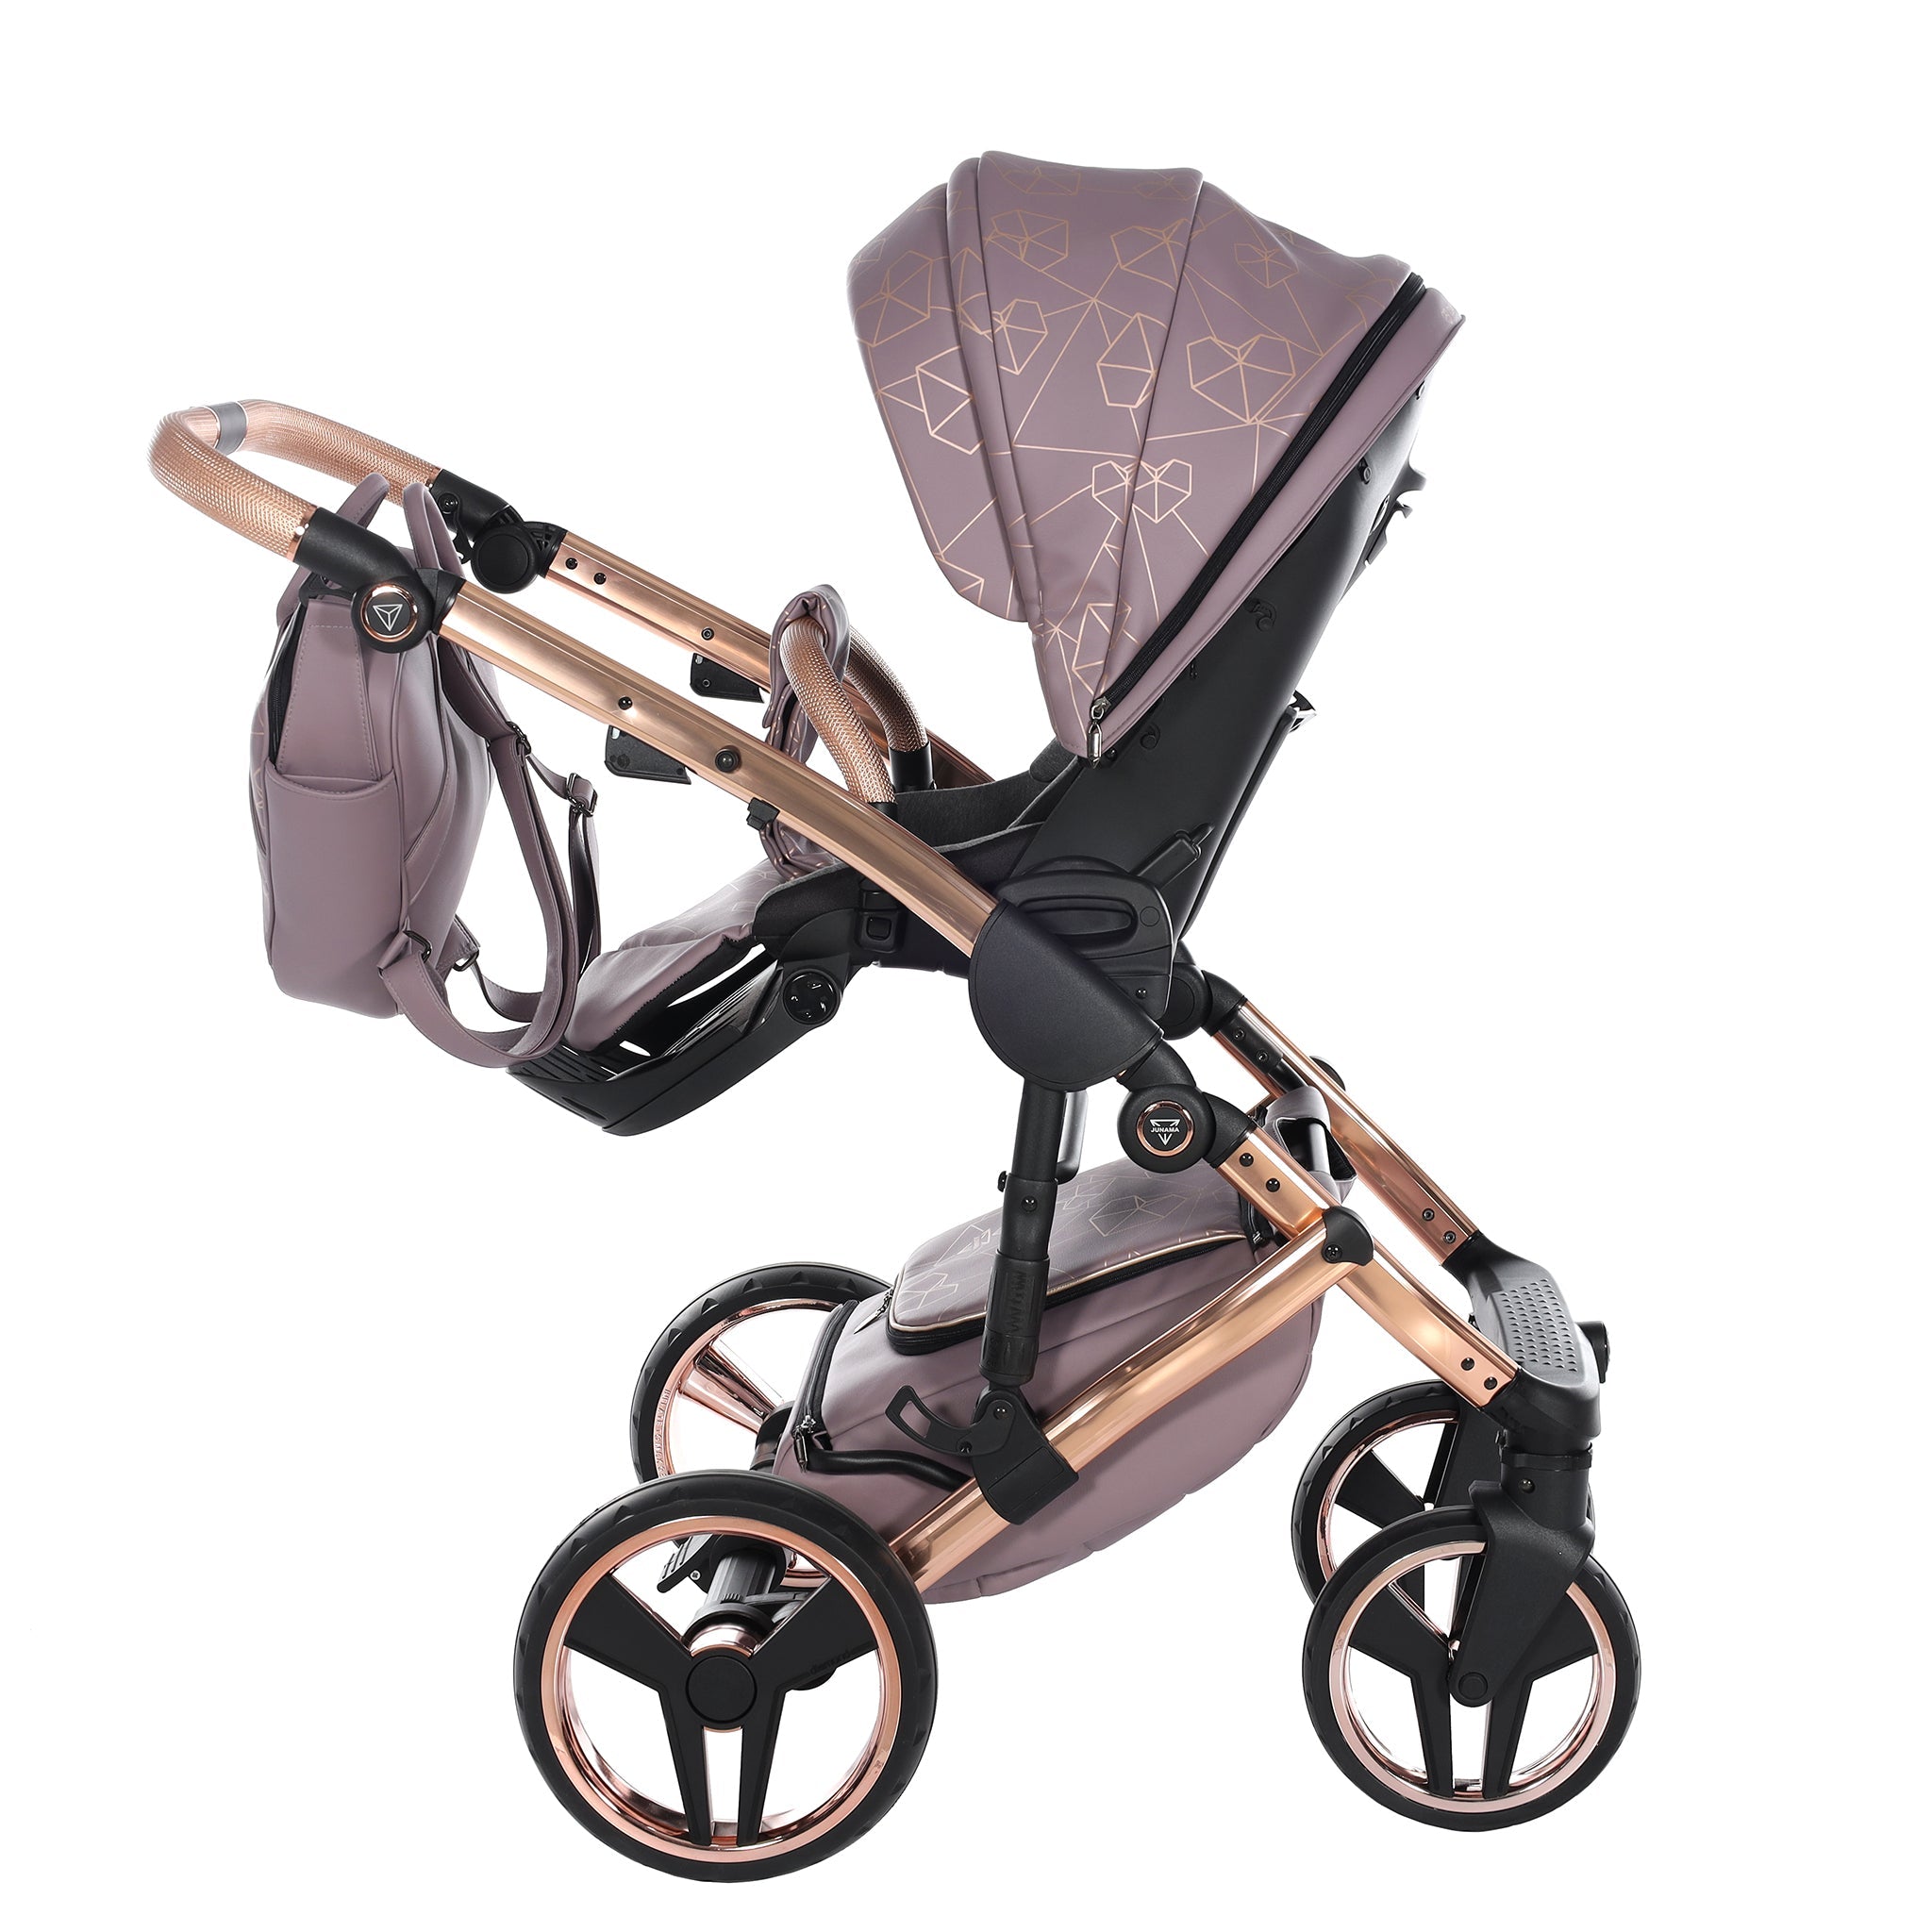 Junama Heart, baby prams or stroller 2 in 1 - Violet and Copper, Code number: JUNHERT04